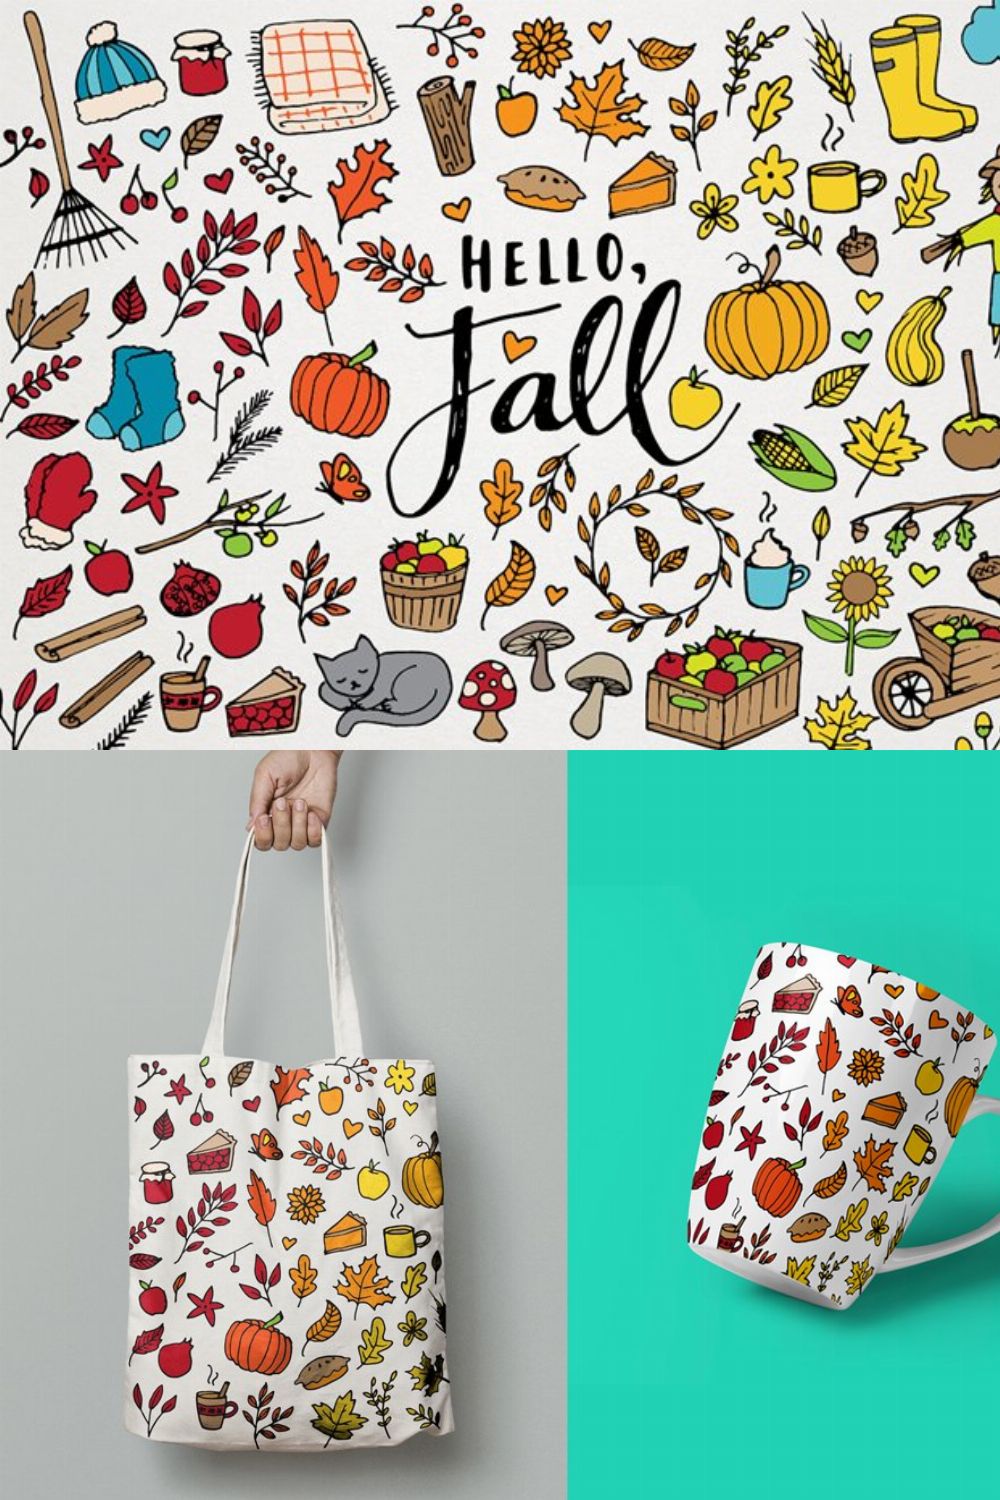 Hello Fall! Autumn 100+ Clipart Set pinterest preview image.